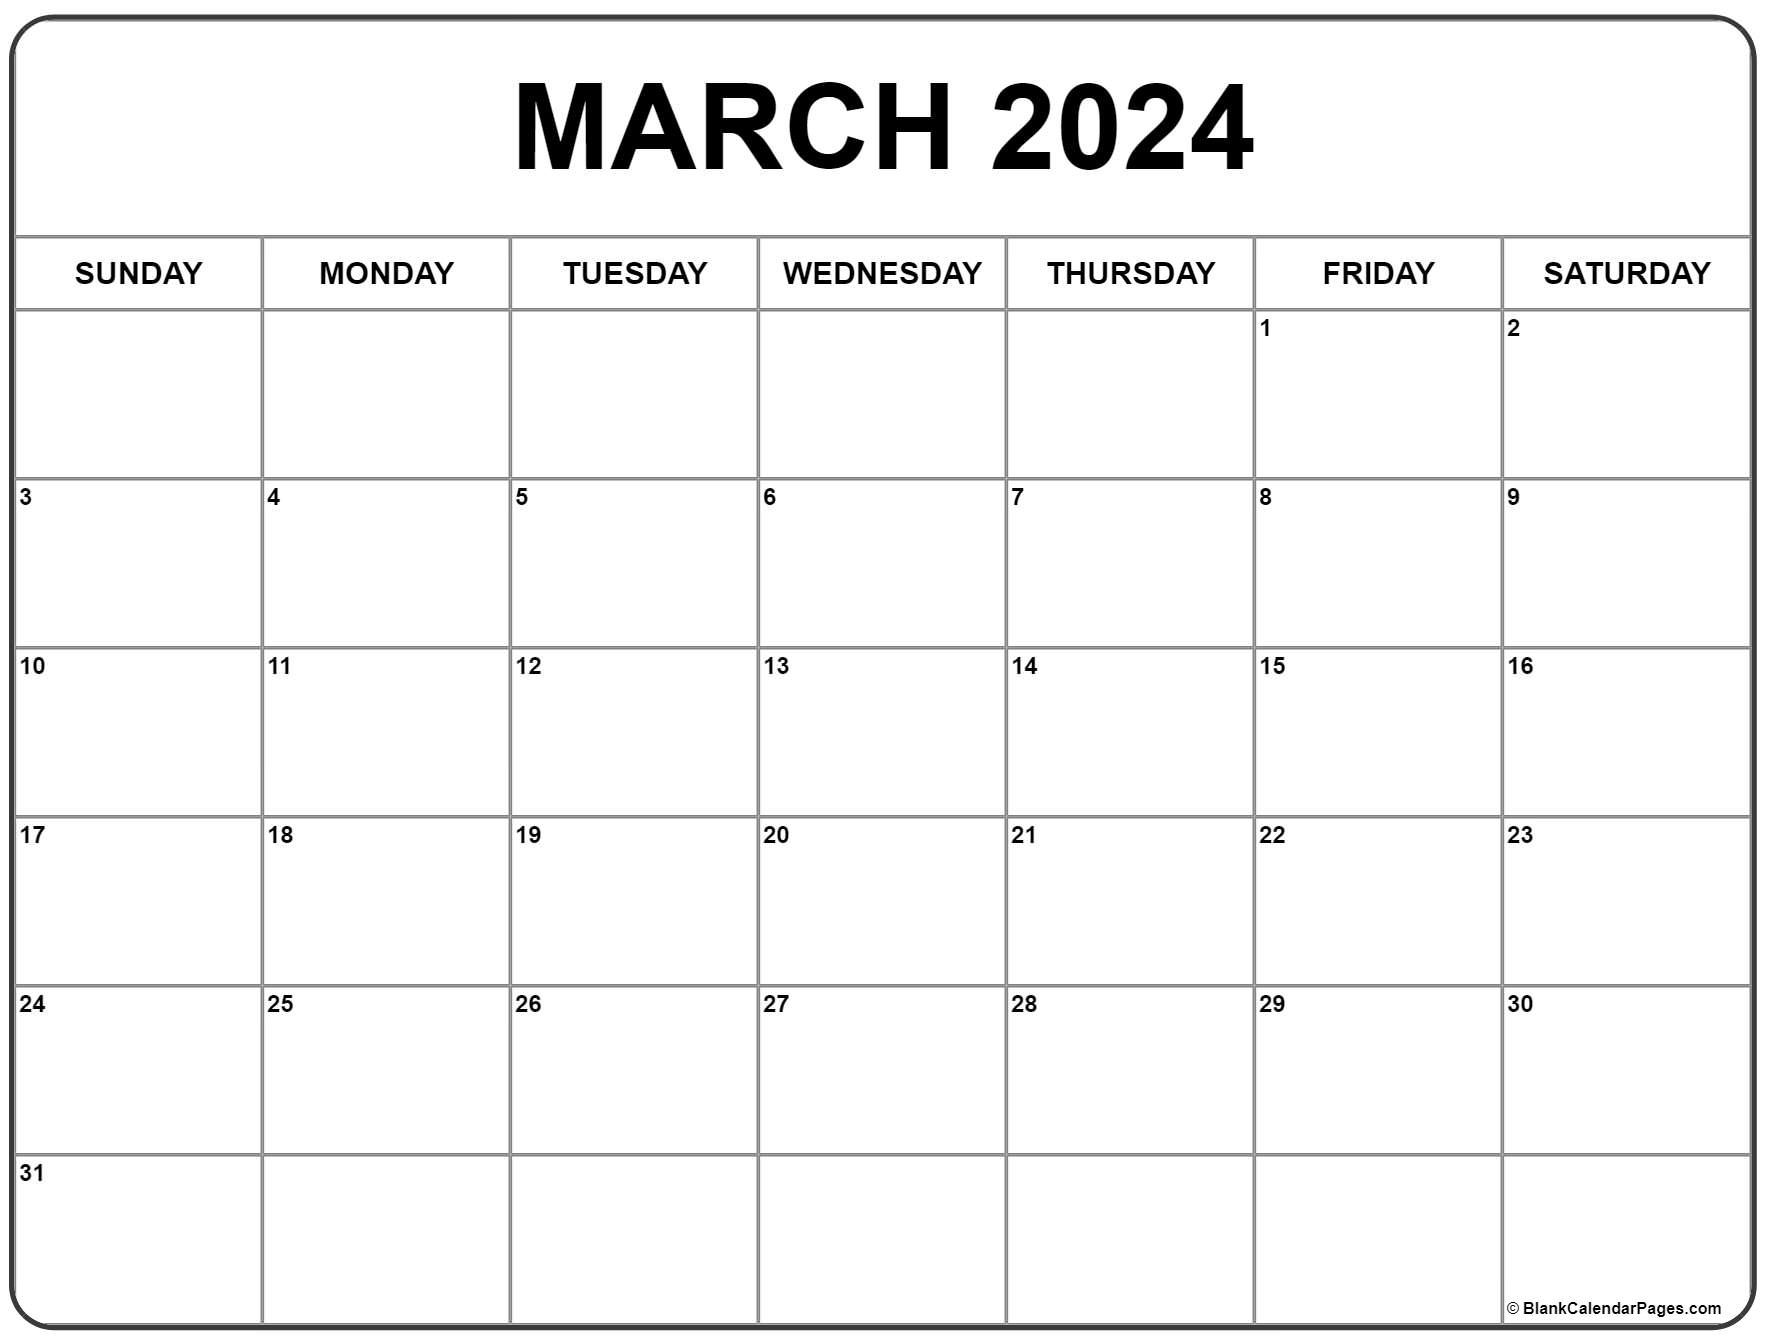 March 2024 Calendar | Free Printable Calendar for March Free Printable Calendar 2024